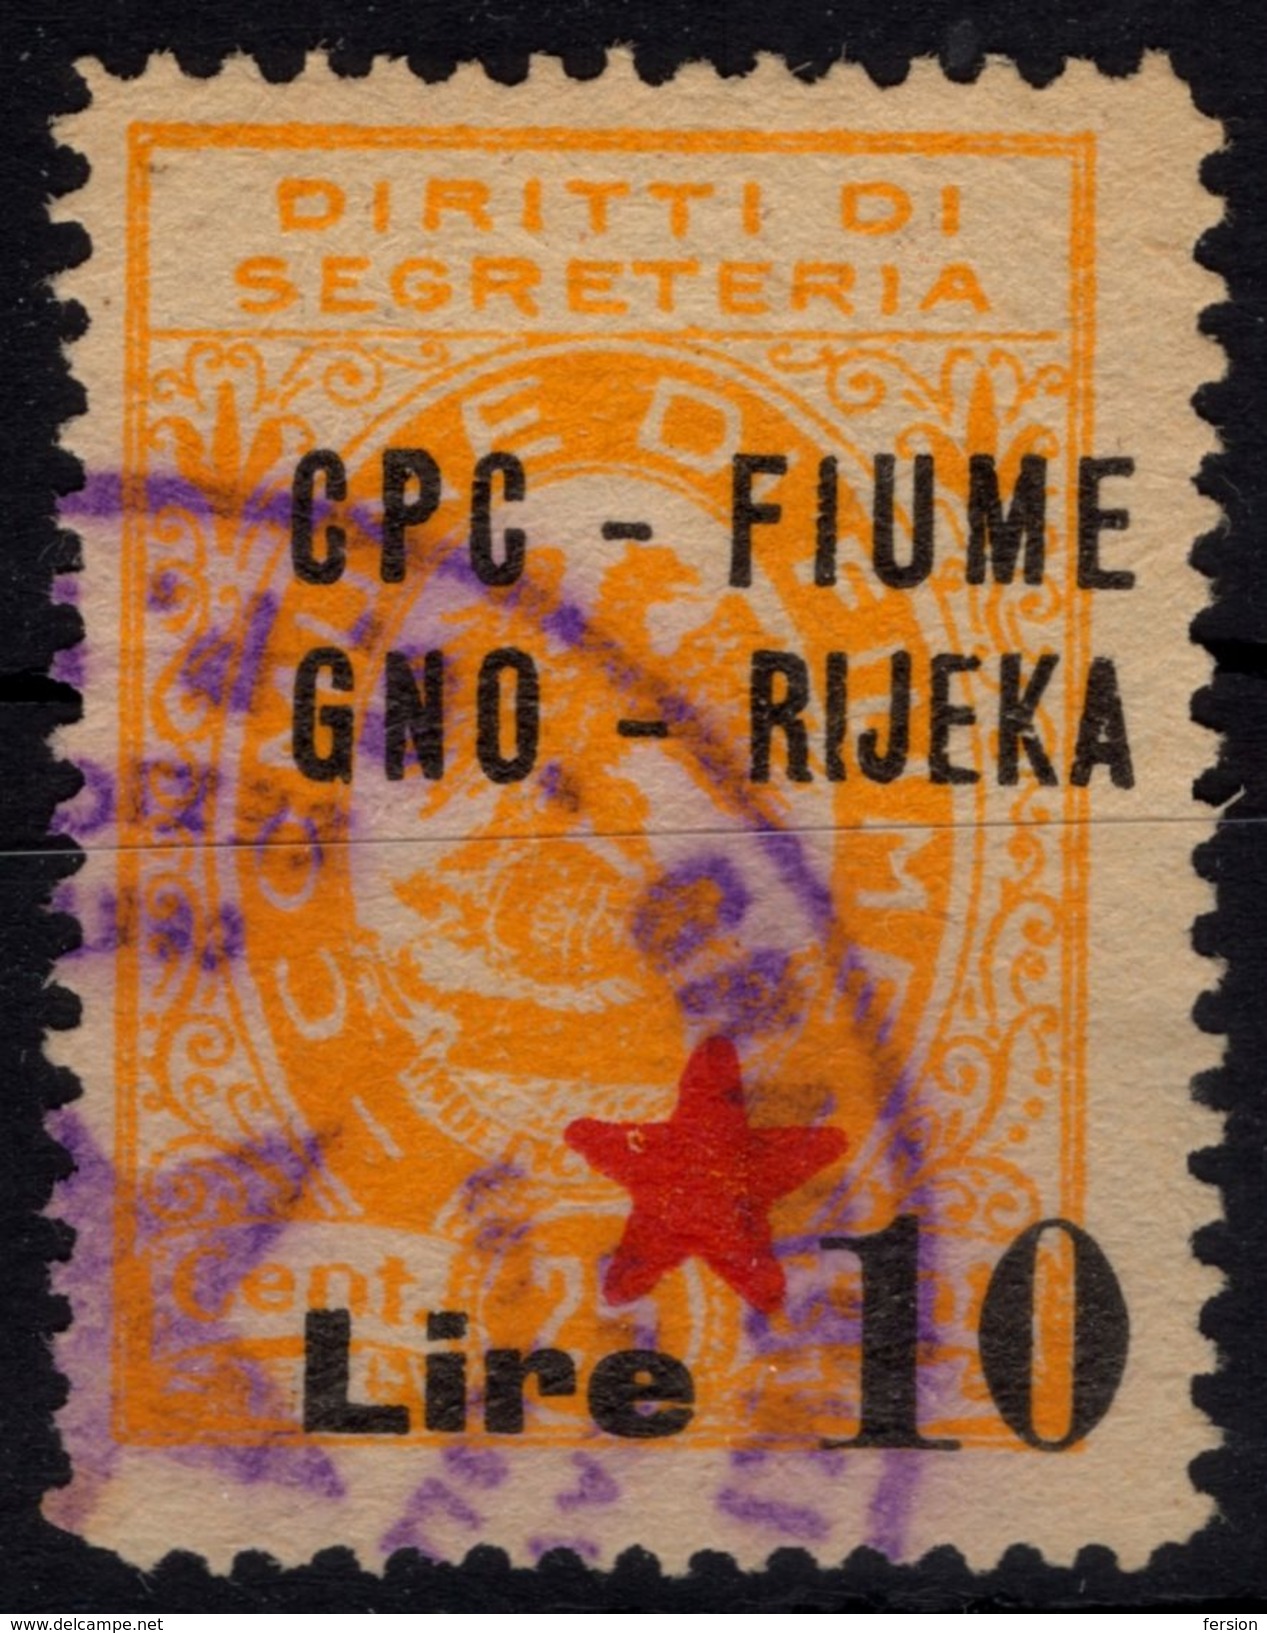 1945 - Istria Istra / Rijeka Fiume - Yugoslavia Occupation - Revenue Stamp - Overprint - Used CROATIA - Jugoslawische Bes.: Fiume